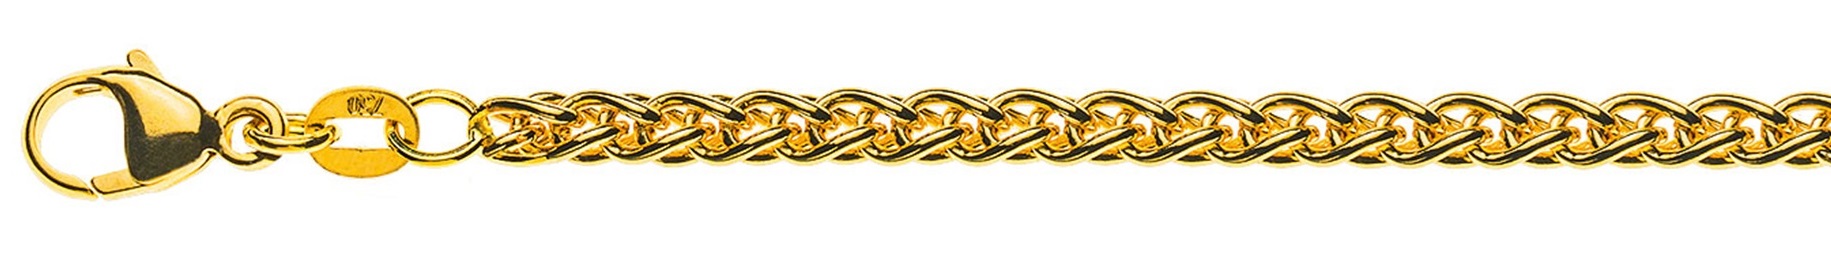 AURONOS Prestige Necklace yellow gold 18K cable chain 55cm 3.3mm